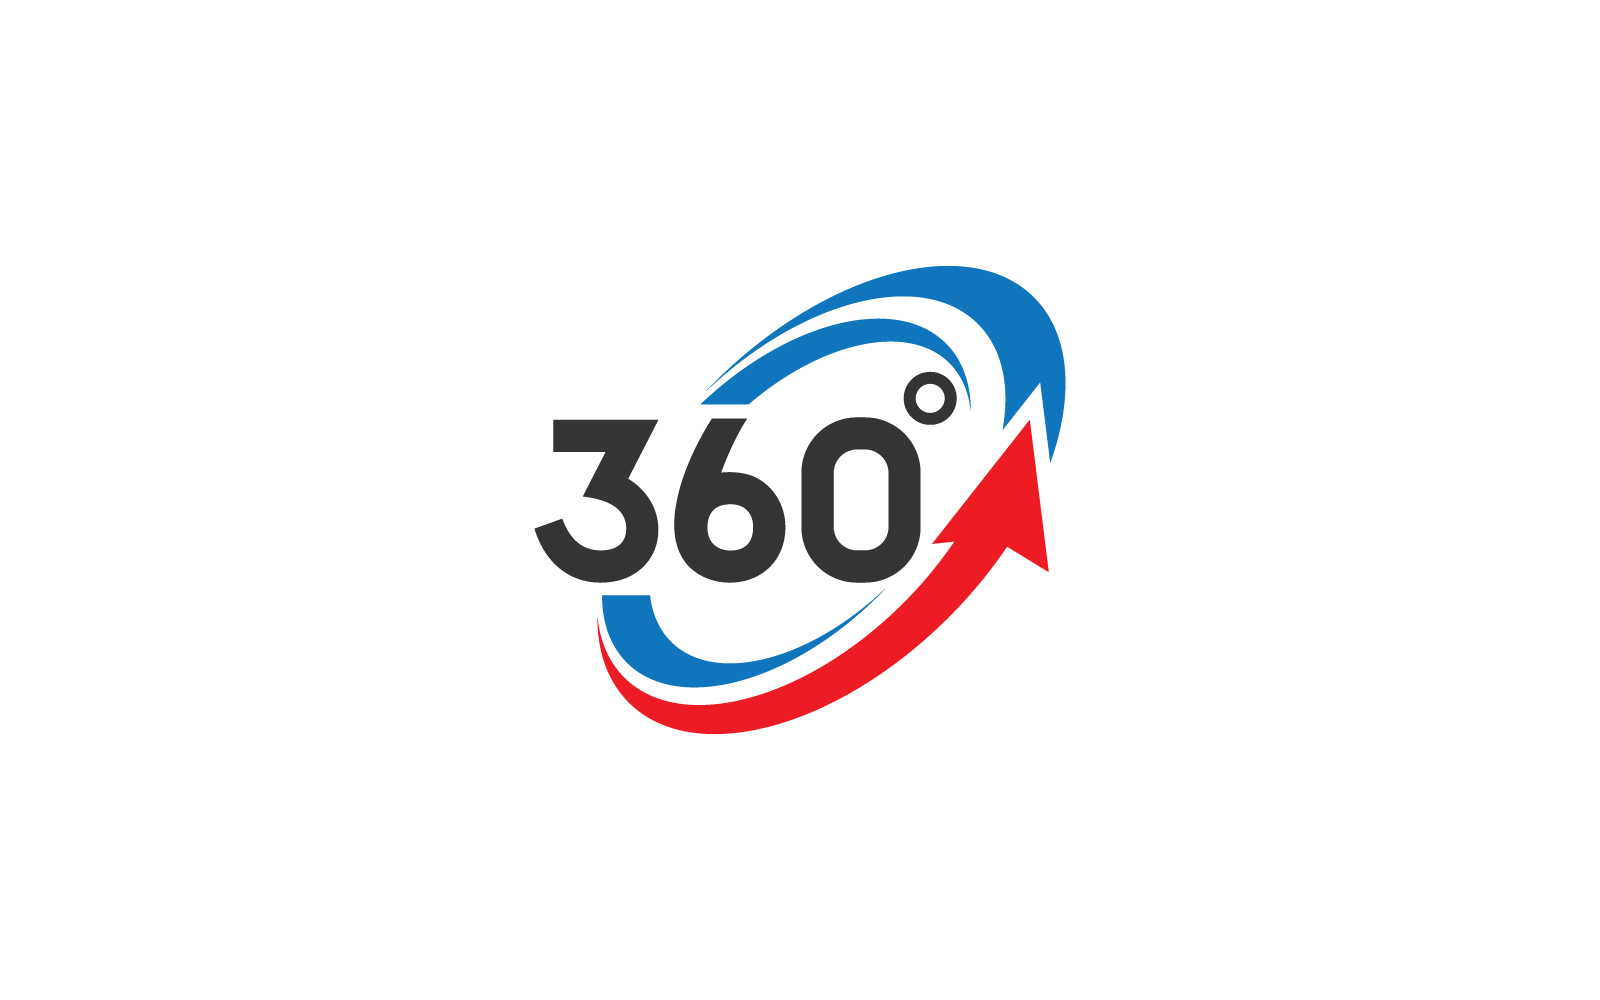 360 view logo vector flat design